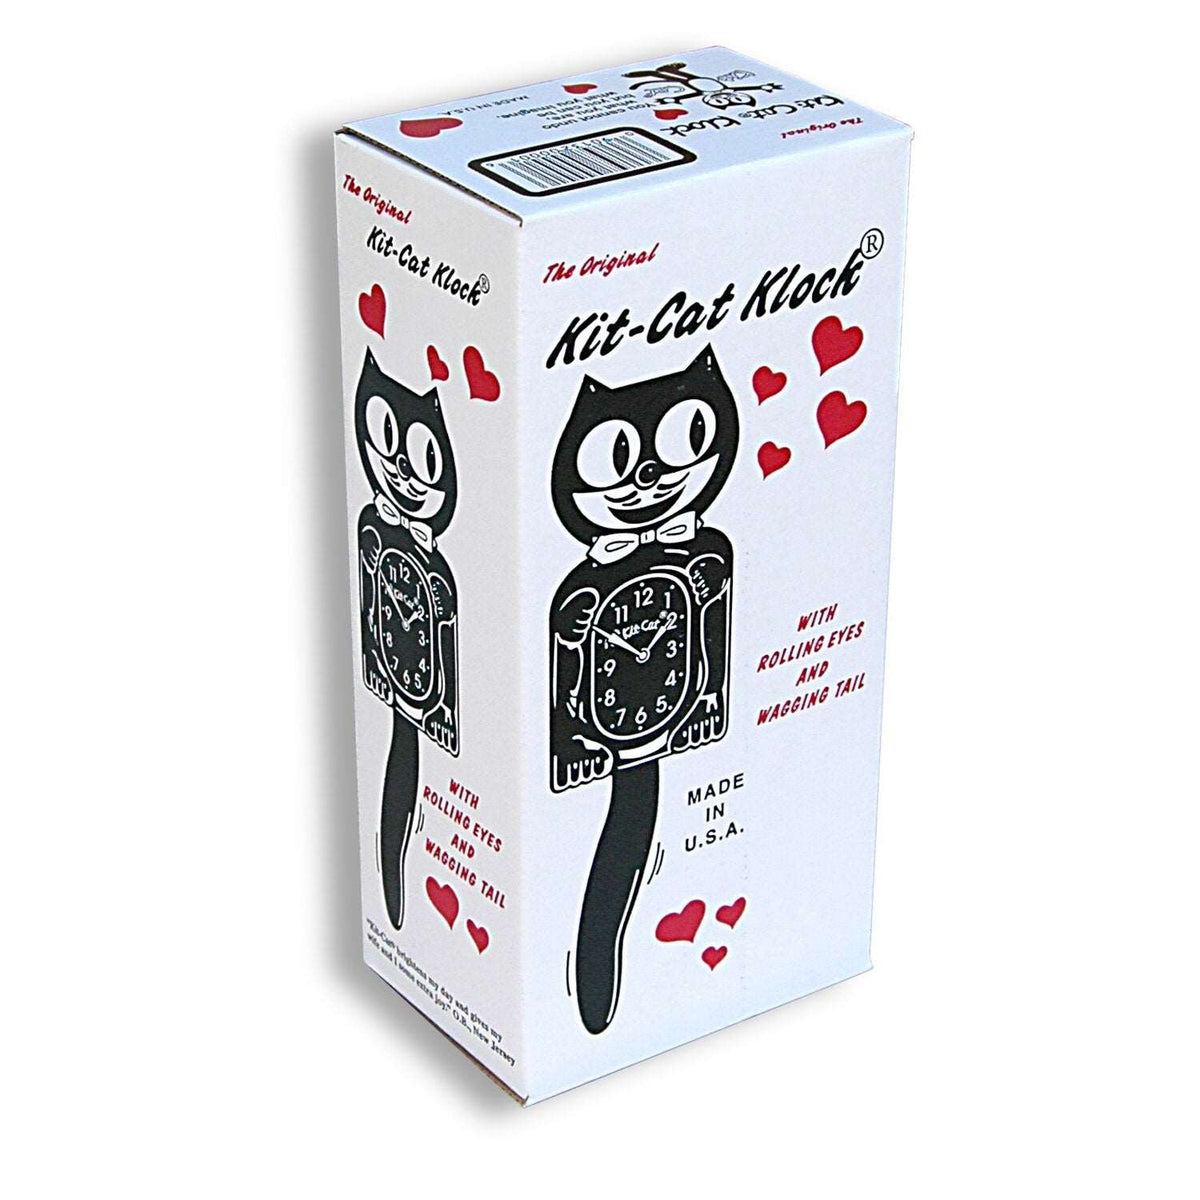 NEW! Kit-Cat Socks - Kit-Cat Klock